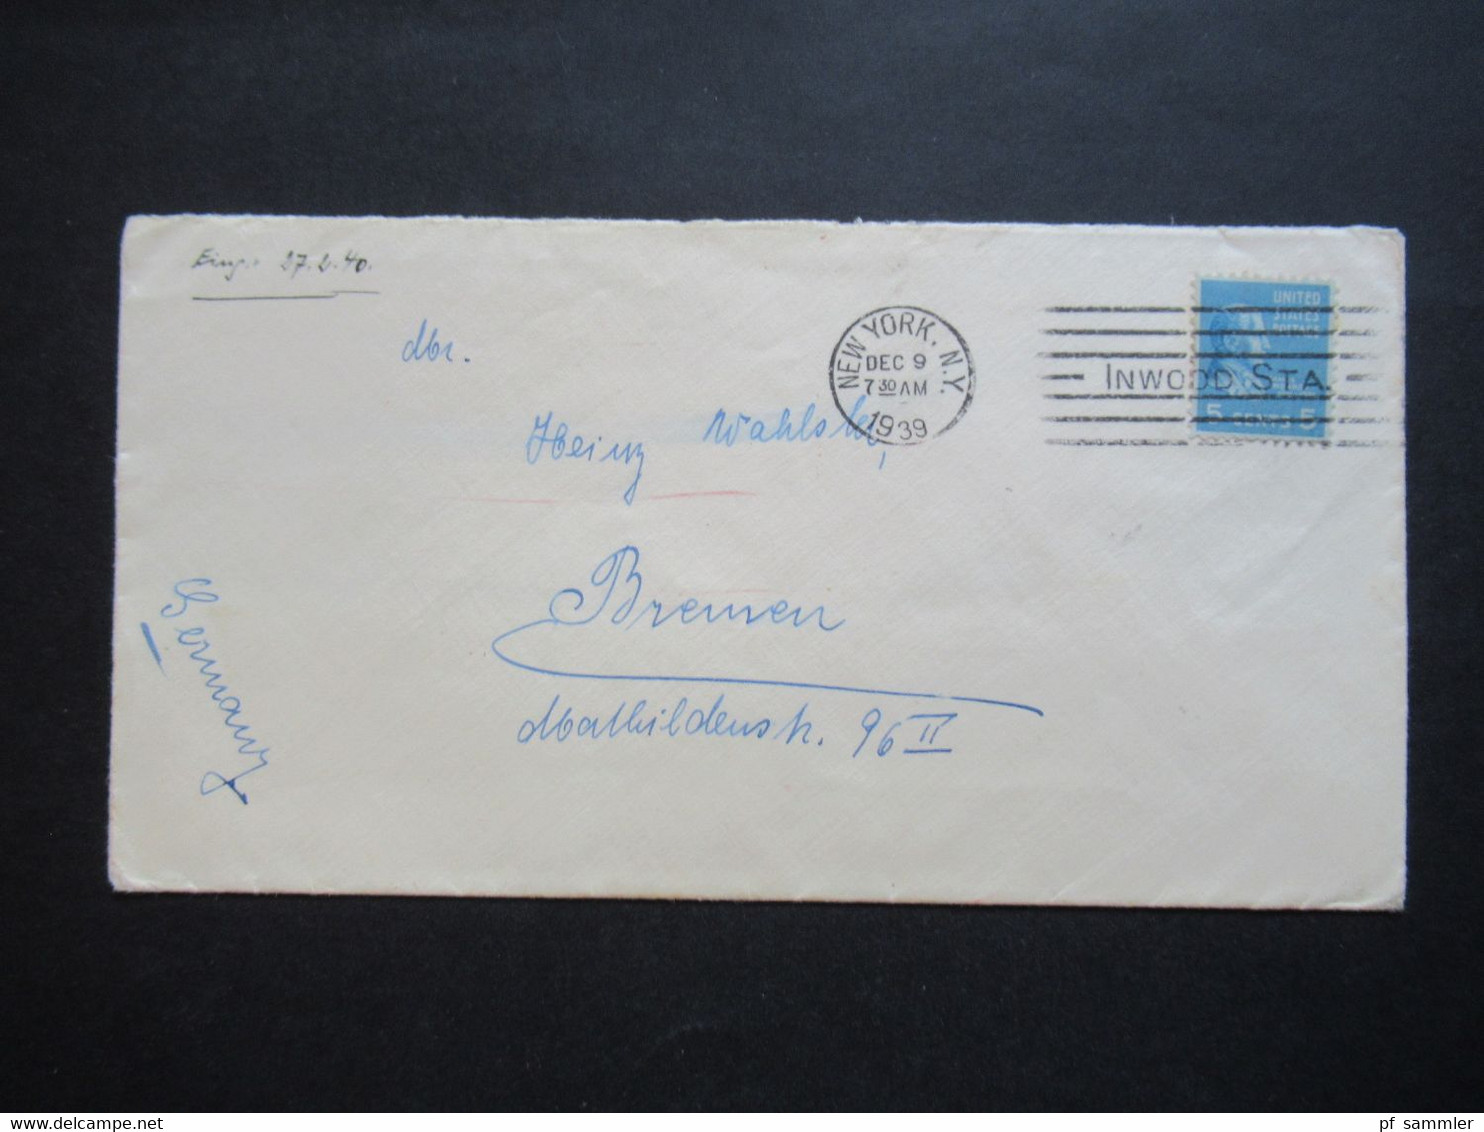 USA 1939 Zensurbeleg Zensurstreifen OKW Geöffnet Nach Bremen Gesendet. Stempel New York Inwood Sta. - Covers & Documents